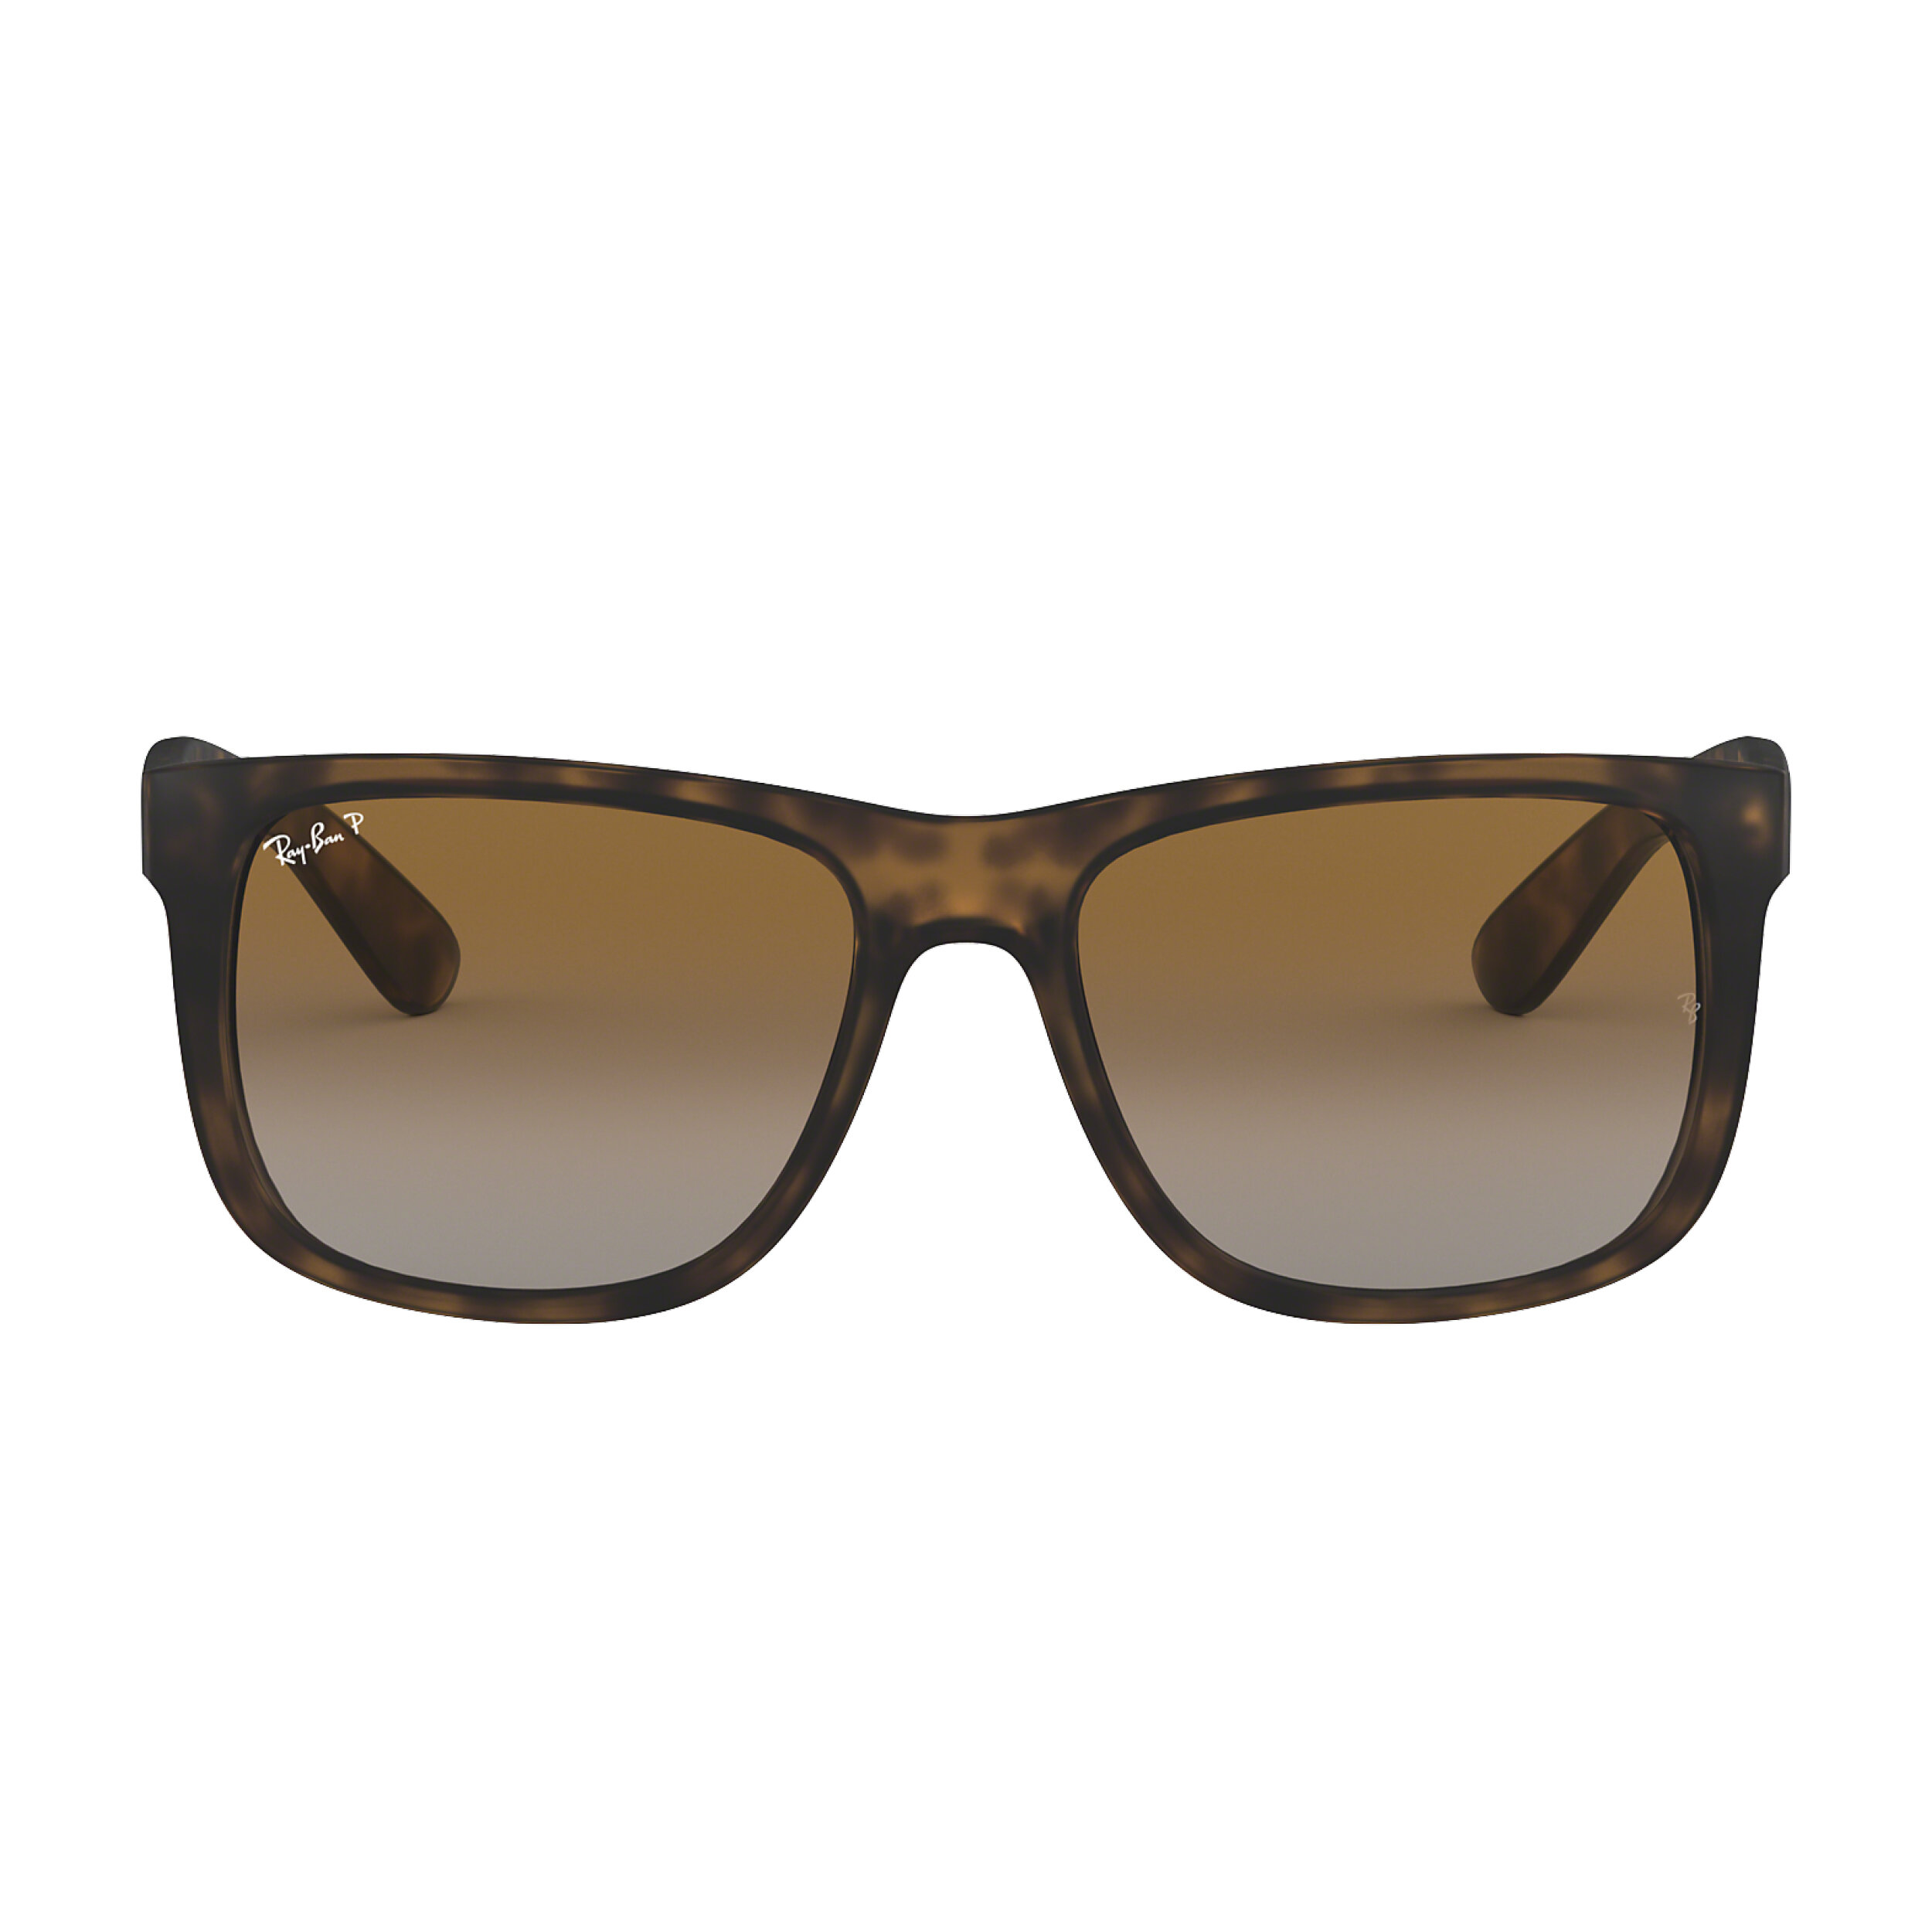 Justin Classic Polarized Gradient Square Mens Sunglasses RB4165 865/T5 55 Jomashop.com Men Accessories Sunglasses Square Sunglasses 